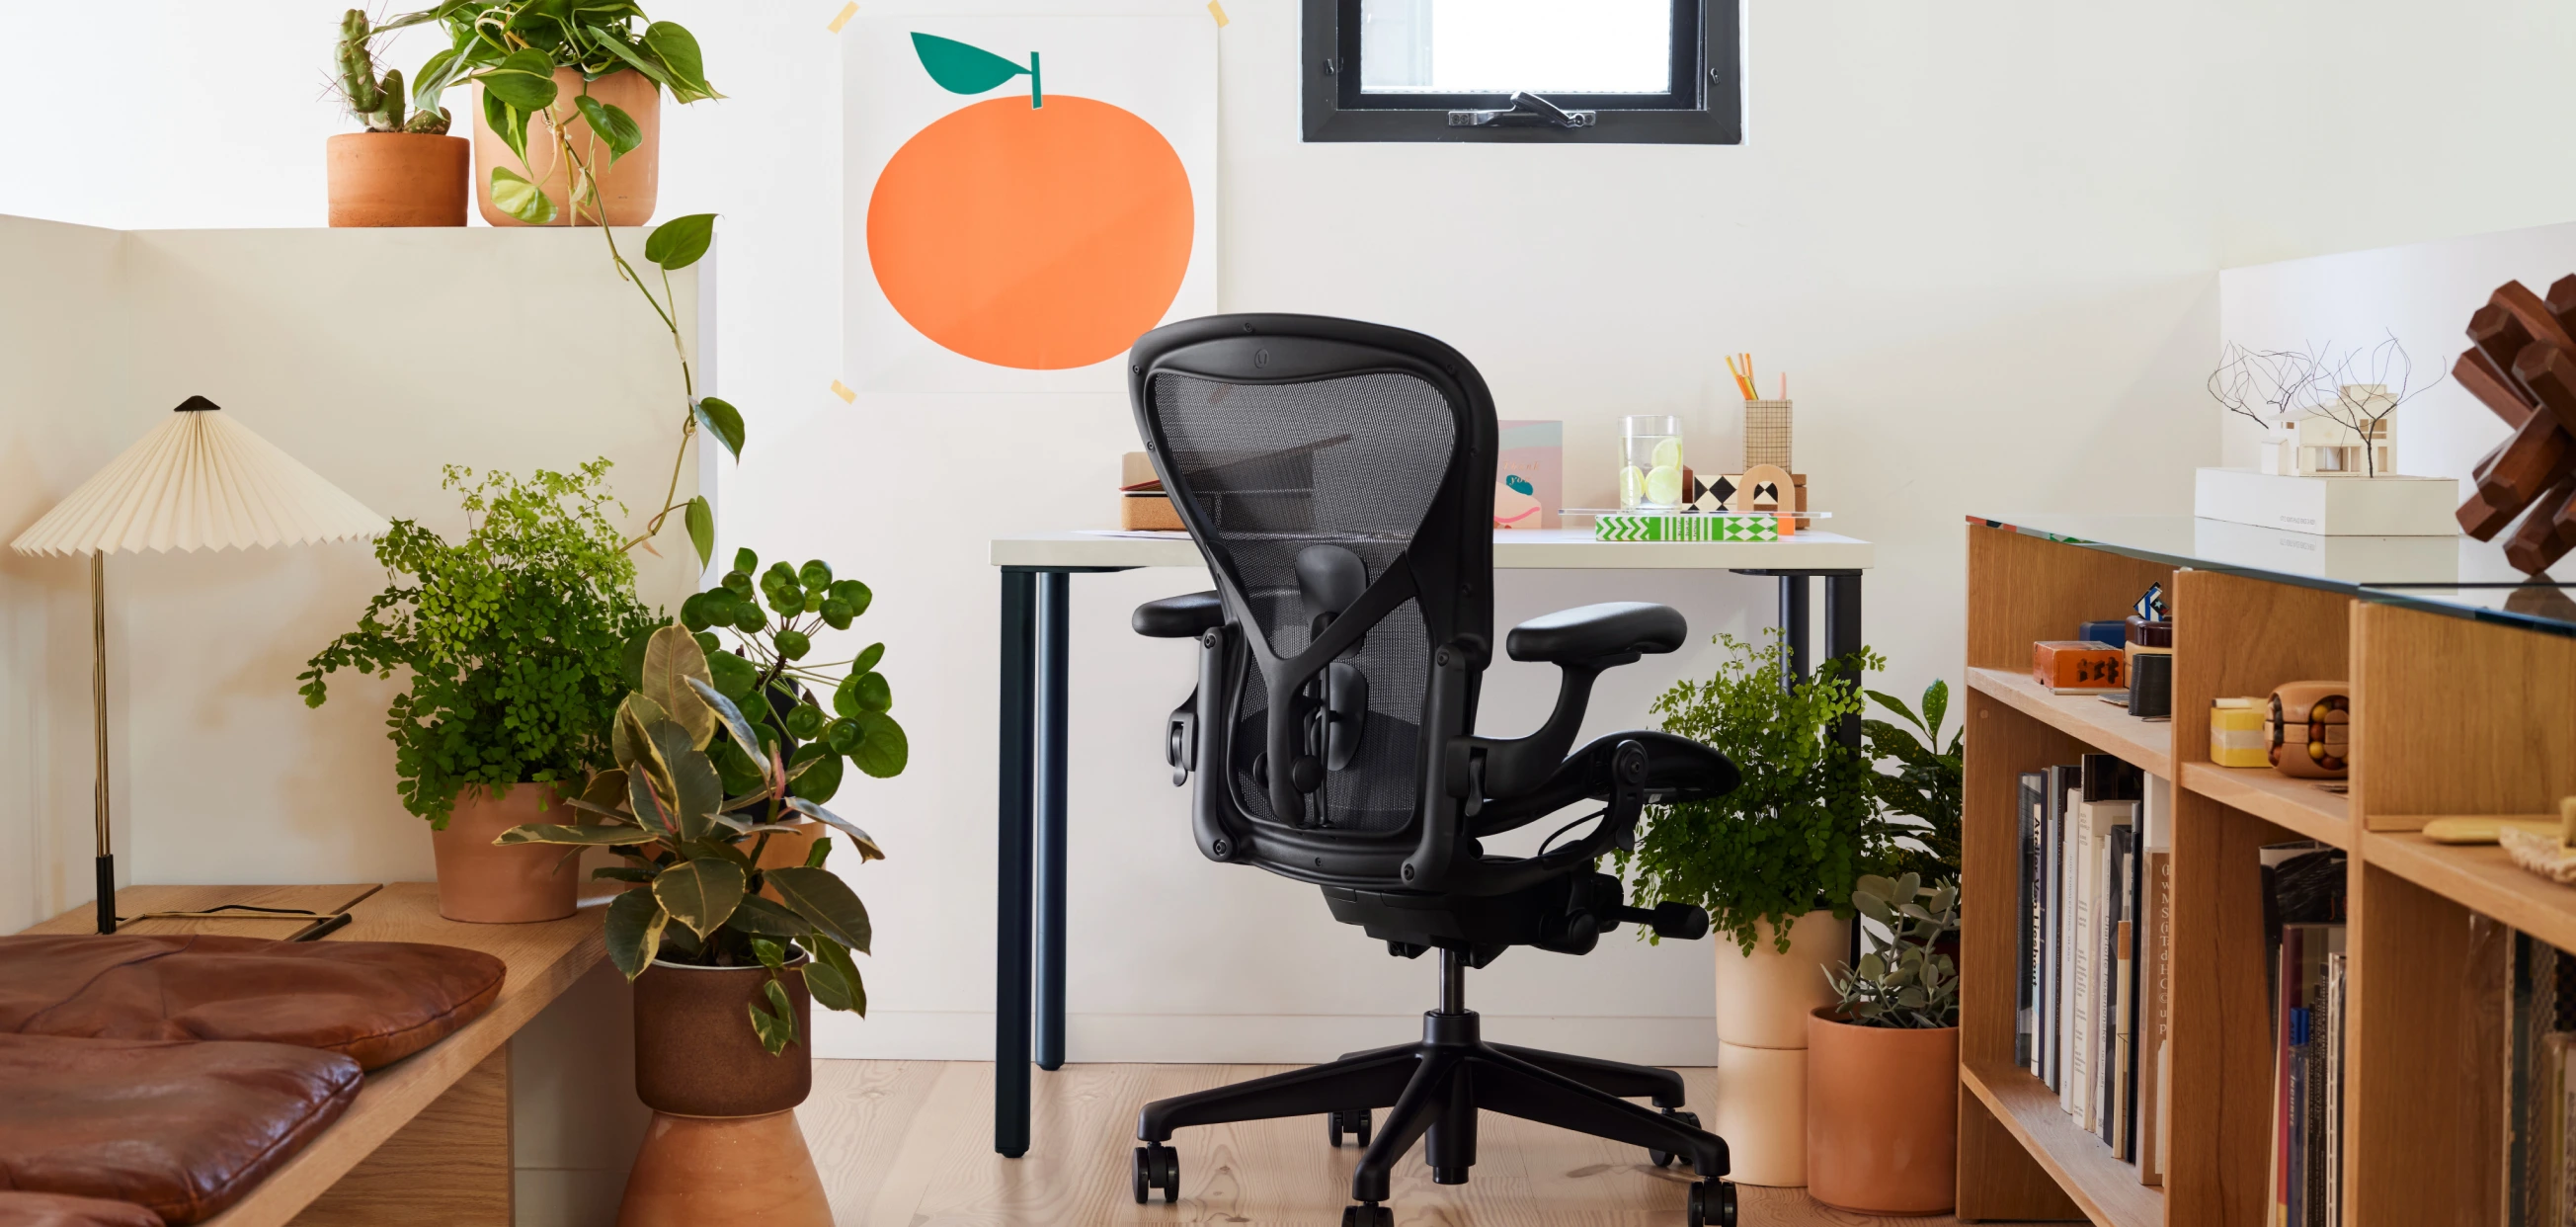 Black MillerKnoll desk chair at a home desk.